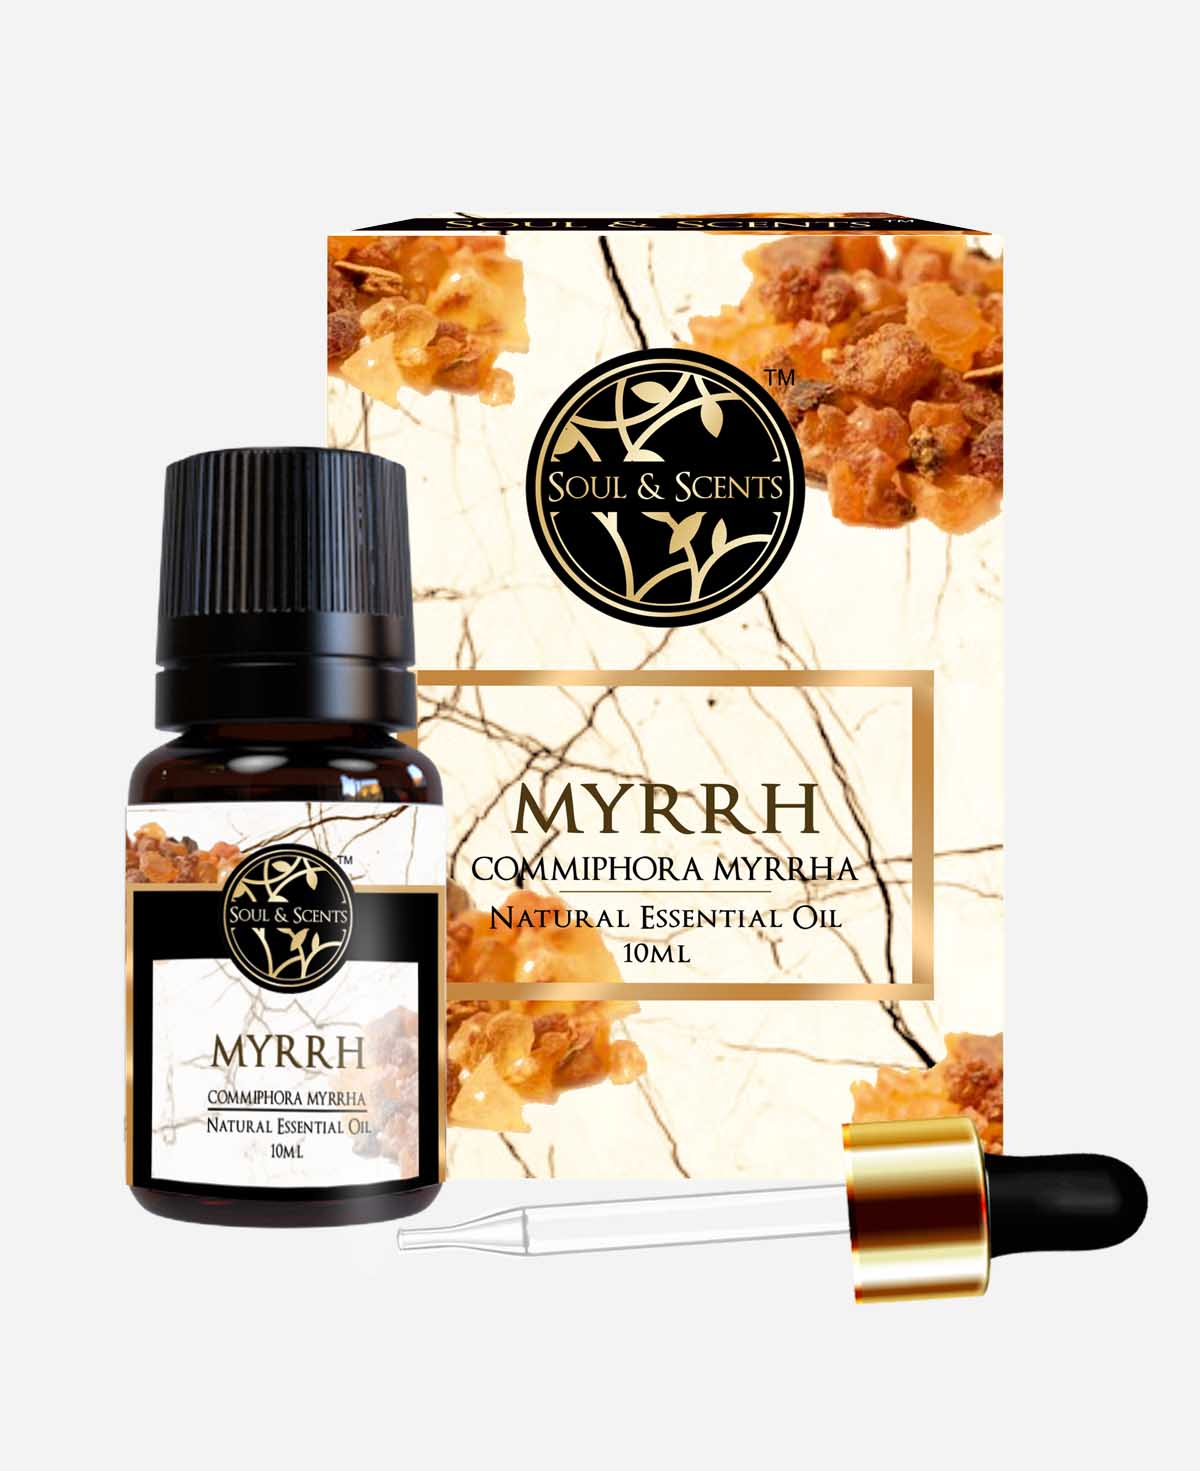 Myrrh essential oil